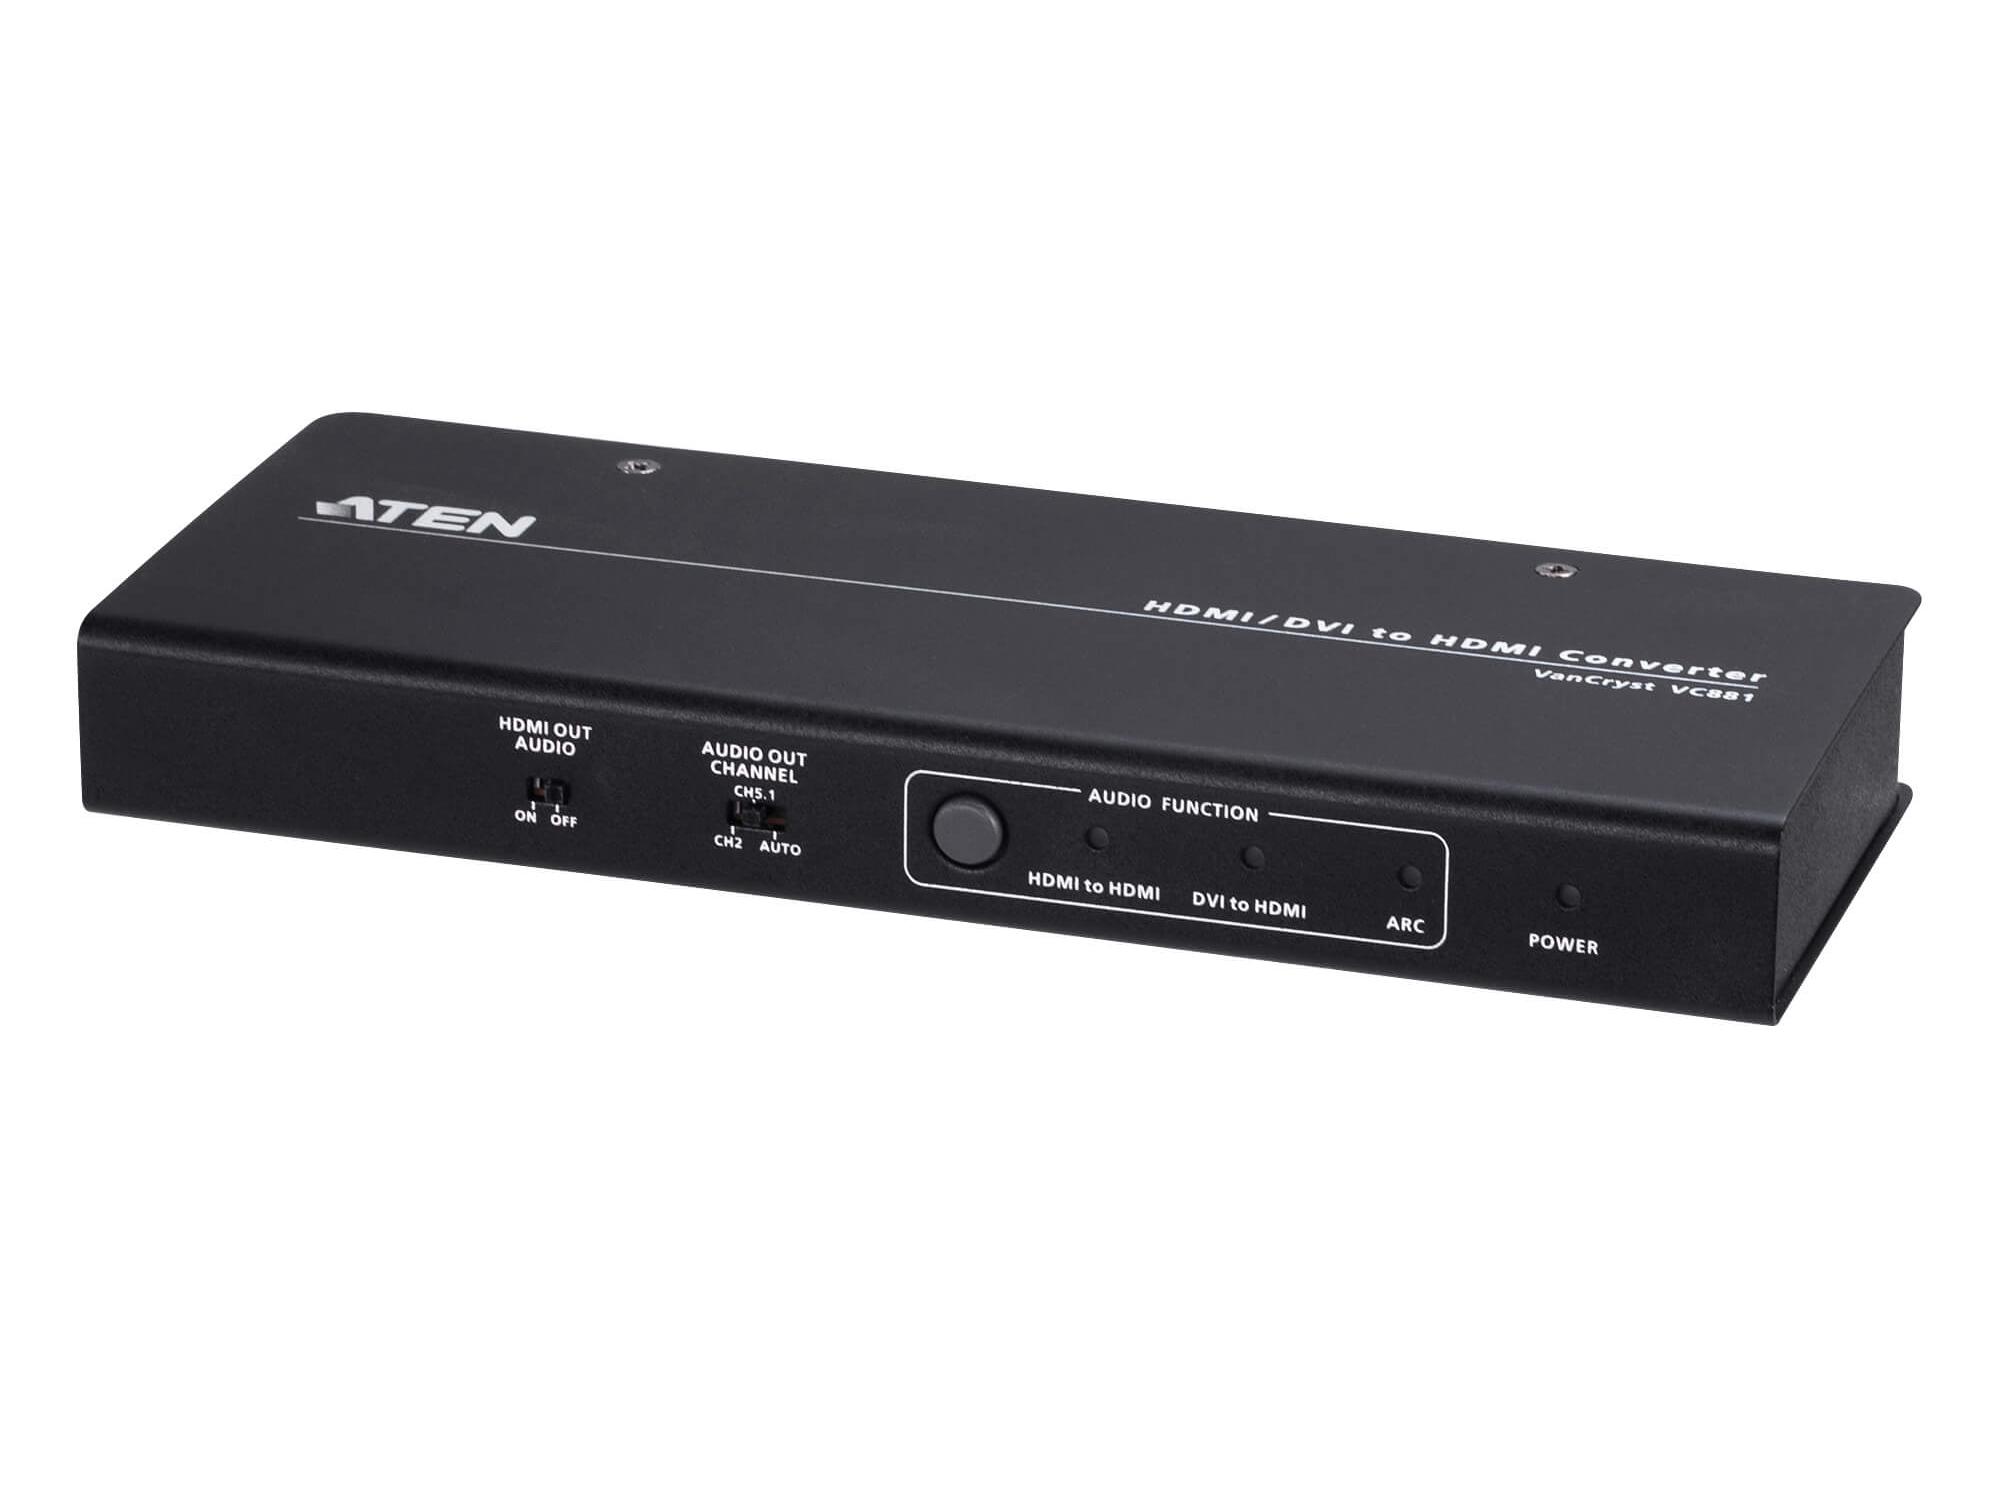 VC881 4K HDMI/DVI to HDMI Converter with Audio De-embedder by Aten